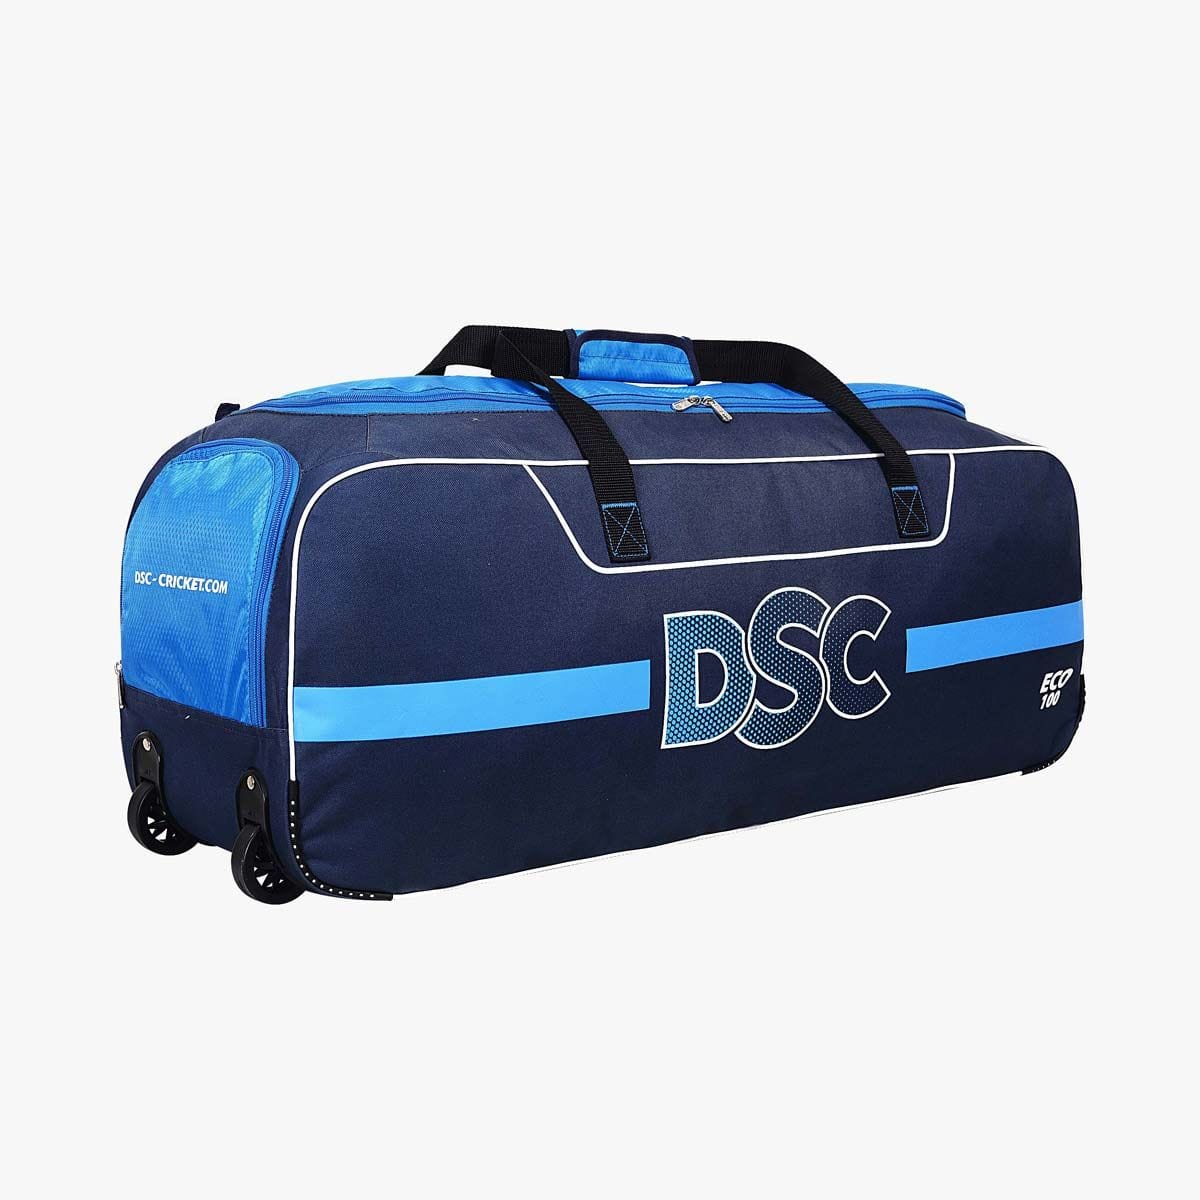 Adidas Cricket Bags DSC Eco 100 Wheels Cricket Bag